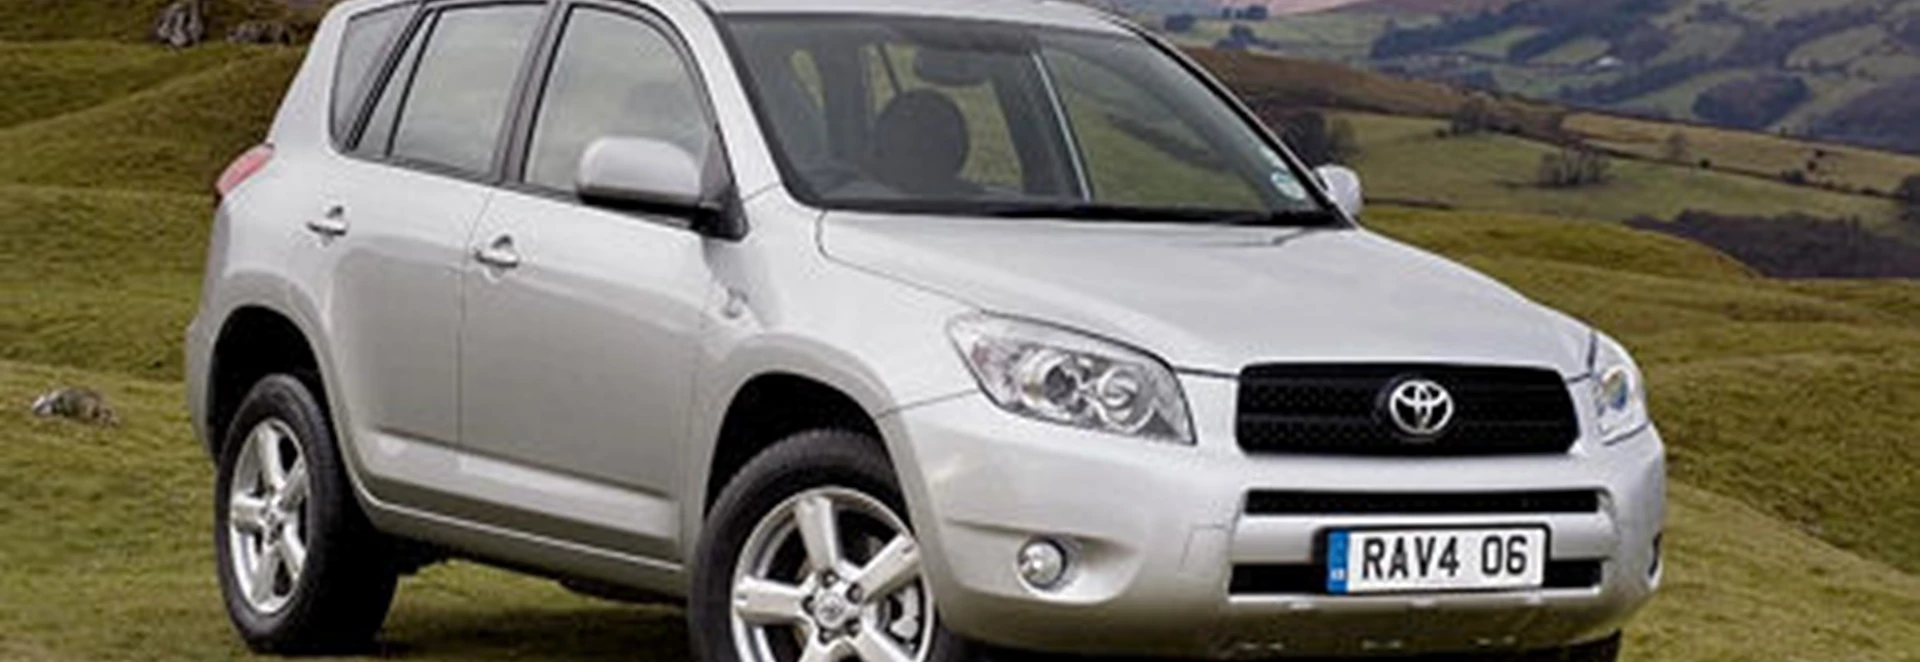 Toyota RAV4 2.0 VVT-i XT5 (2006) 